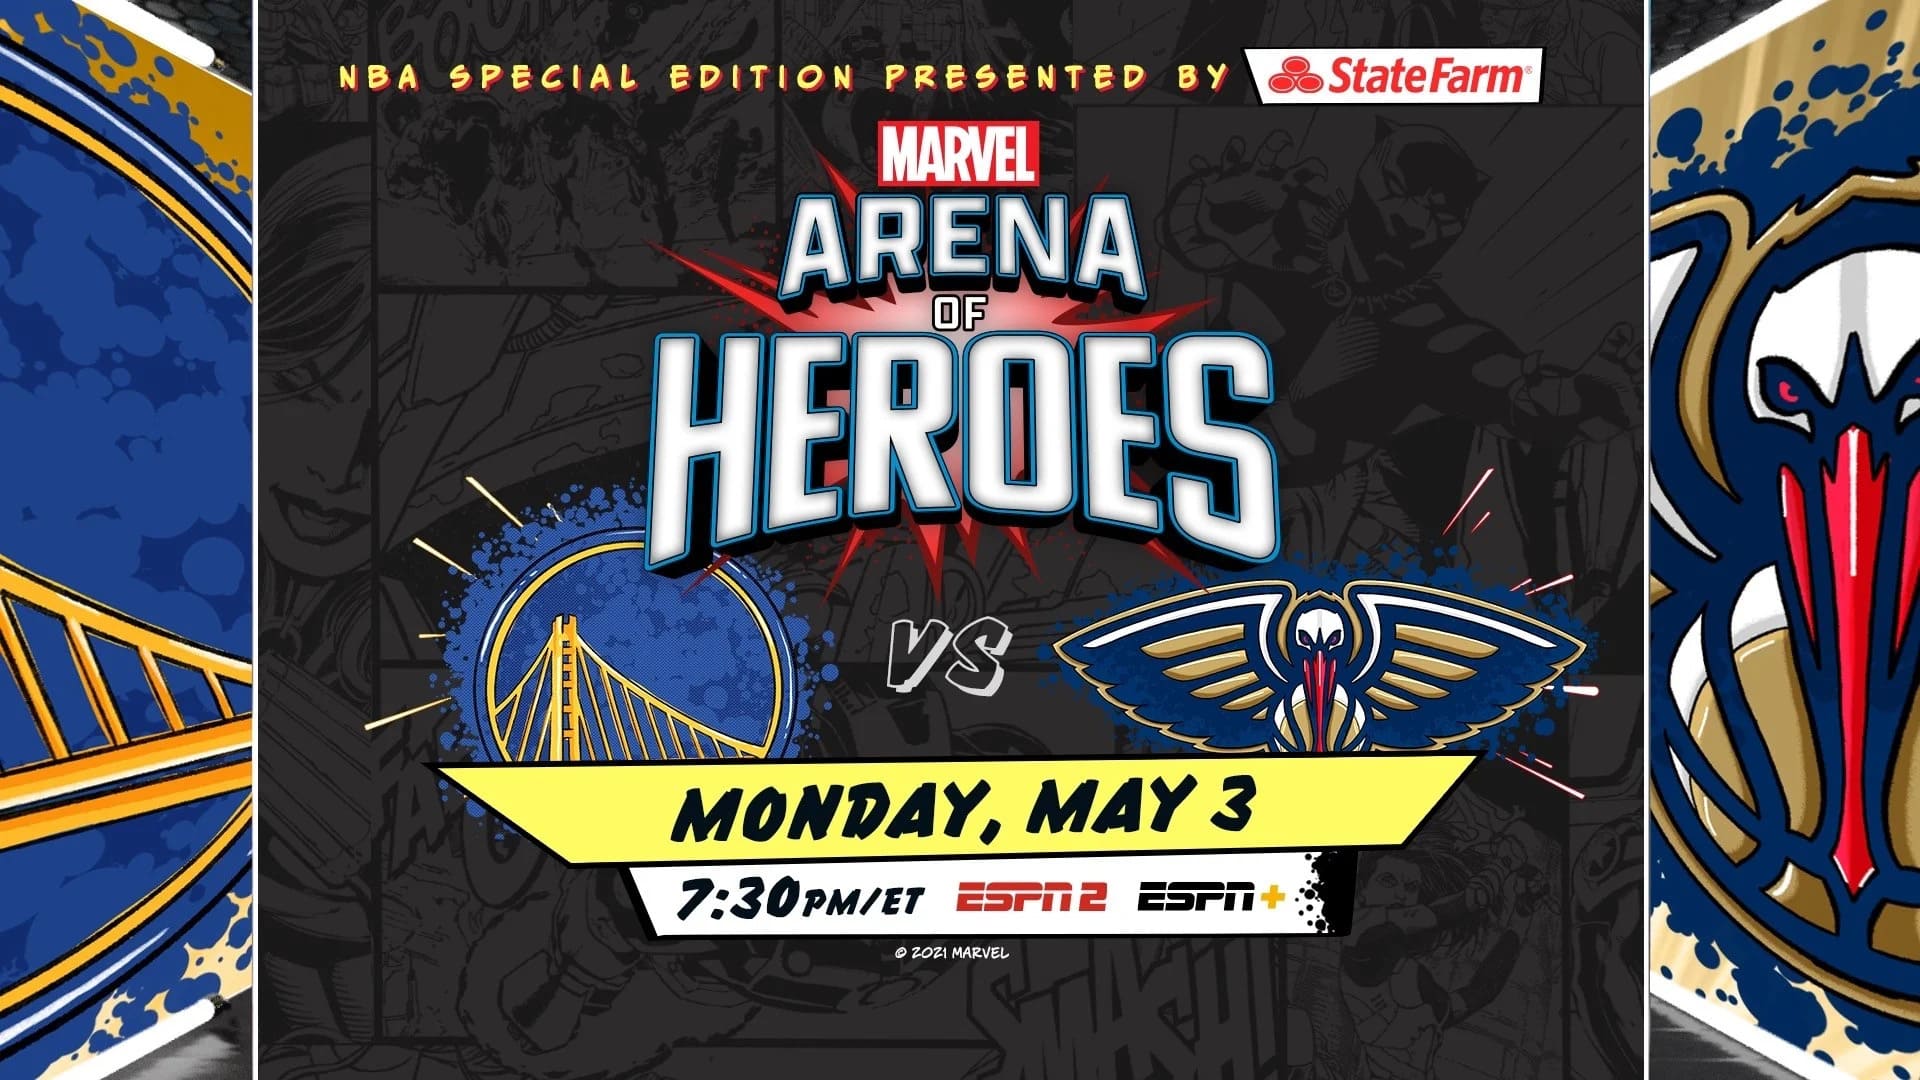 Marvel NBA Arena of Heroes